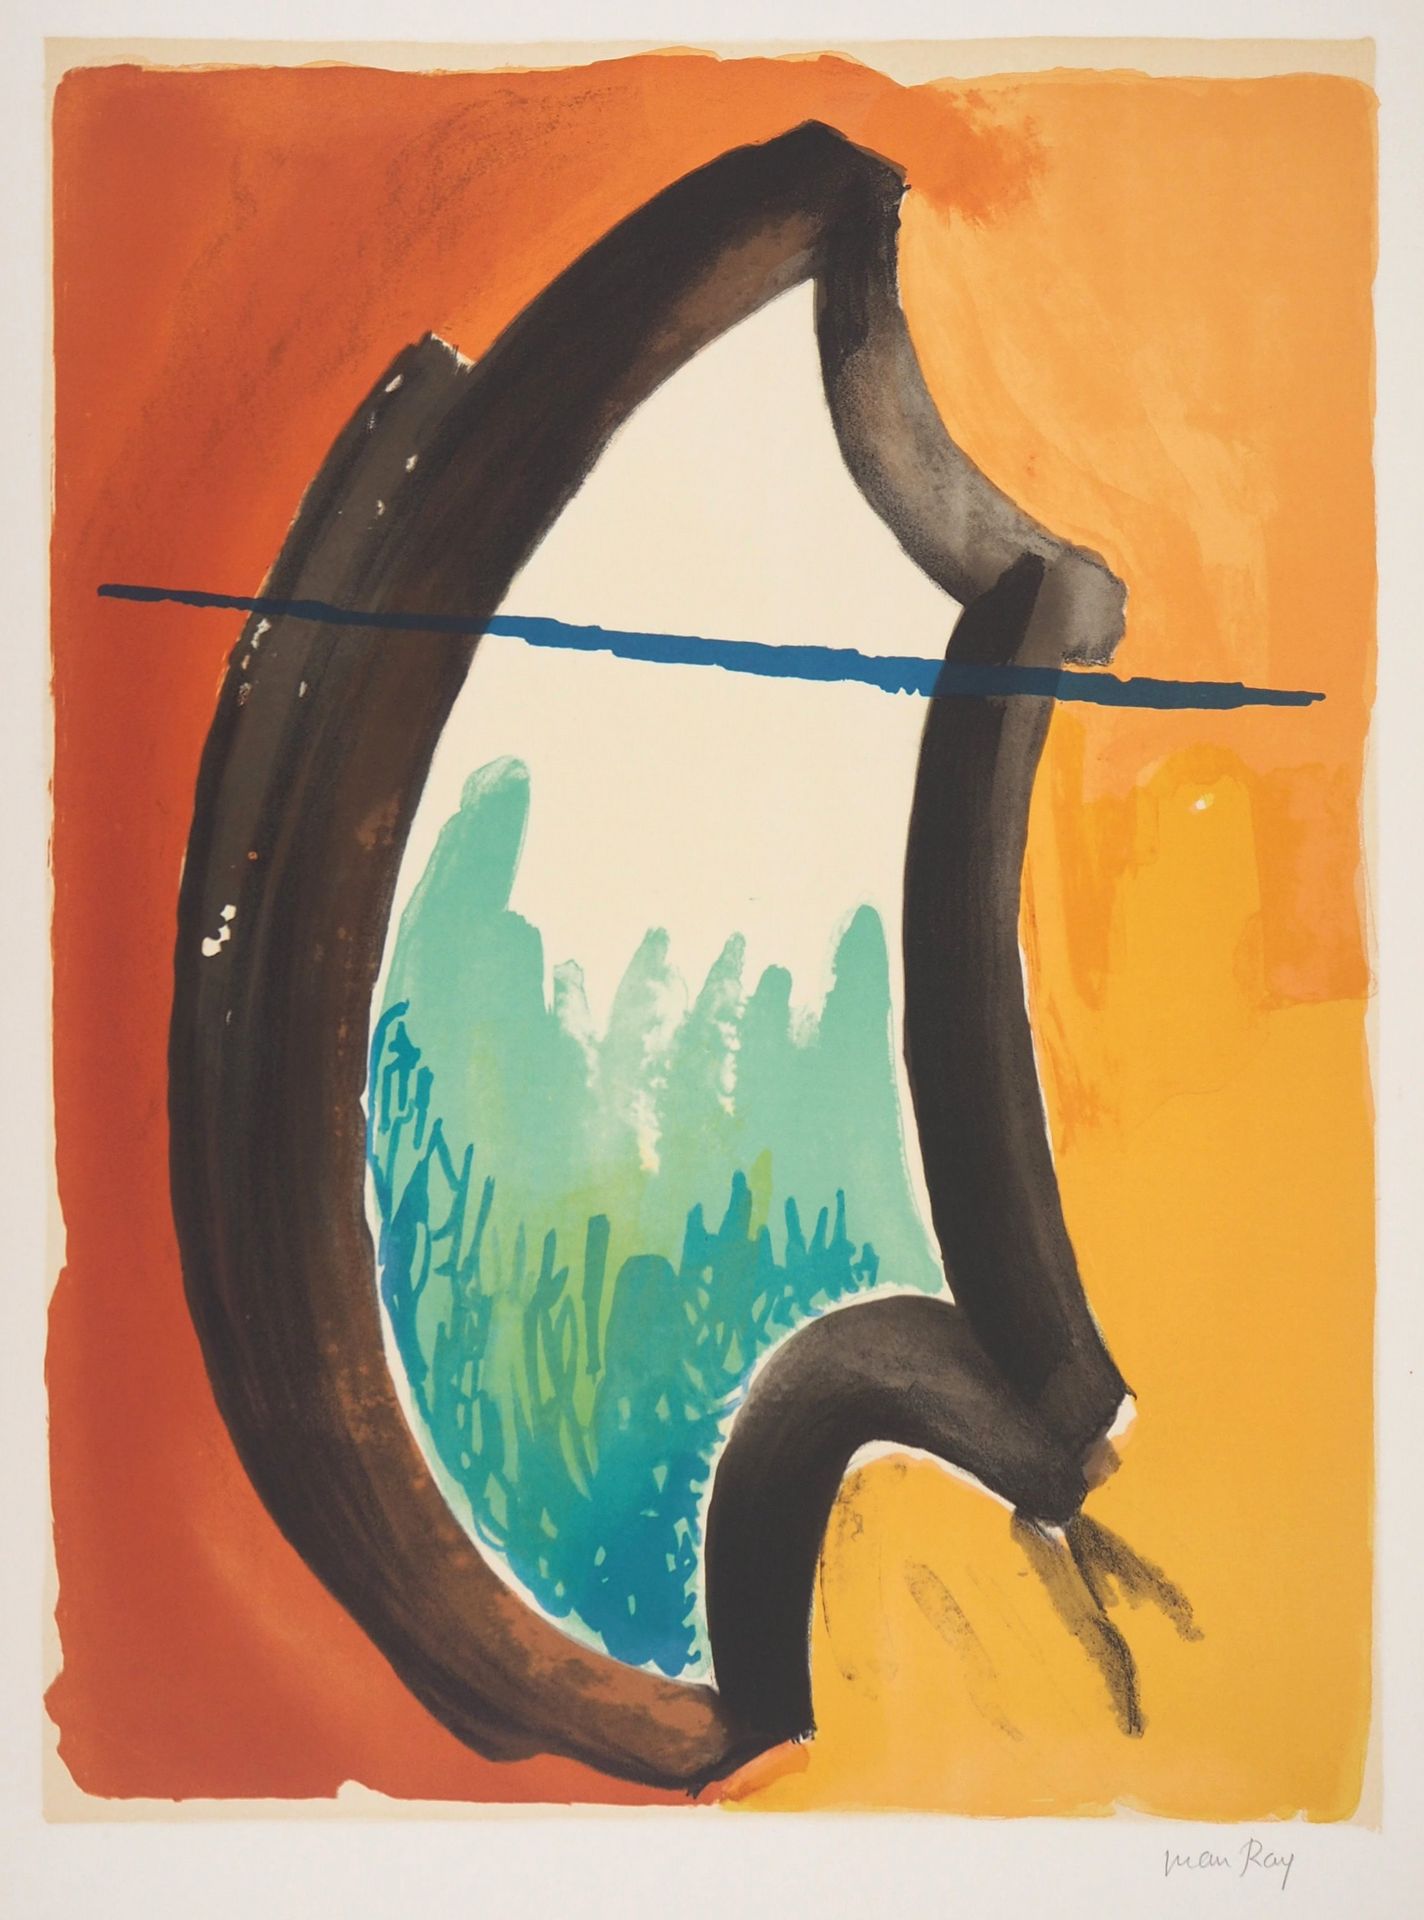 Man Ray 曼-雷(Emmanuel Radnitsky)

梦想之窗，1971年

彩色石版画原作

铅笔签名的艺术家

在Arches牛皮纸上，50.5&hellip;